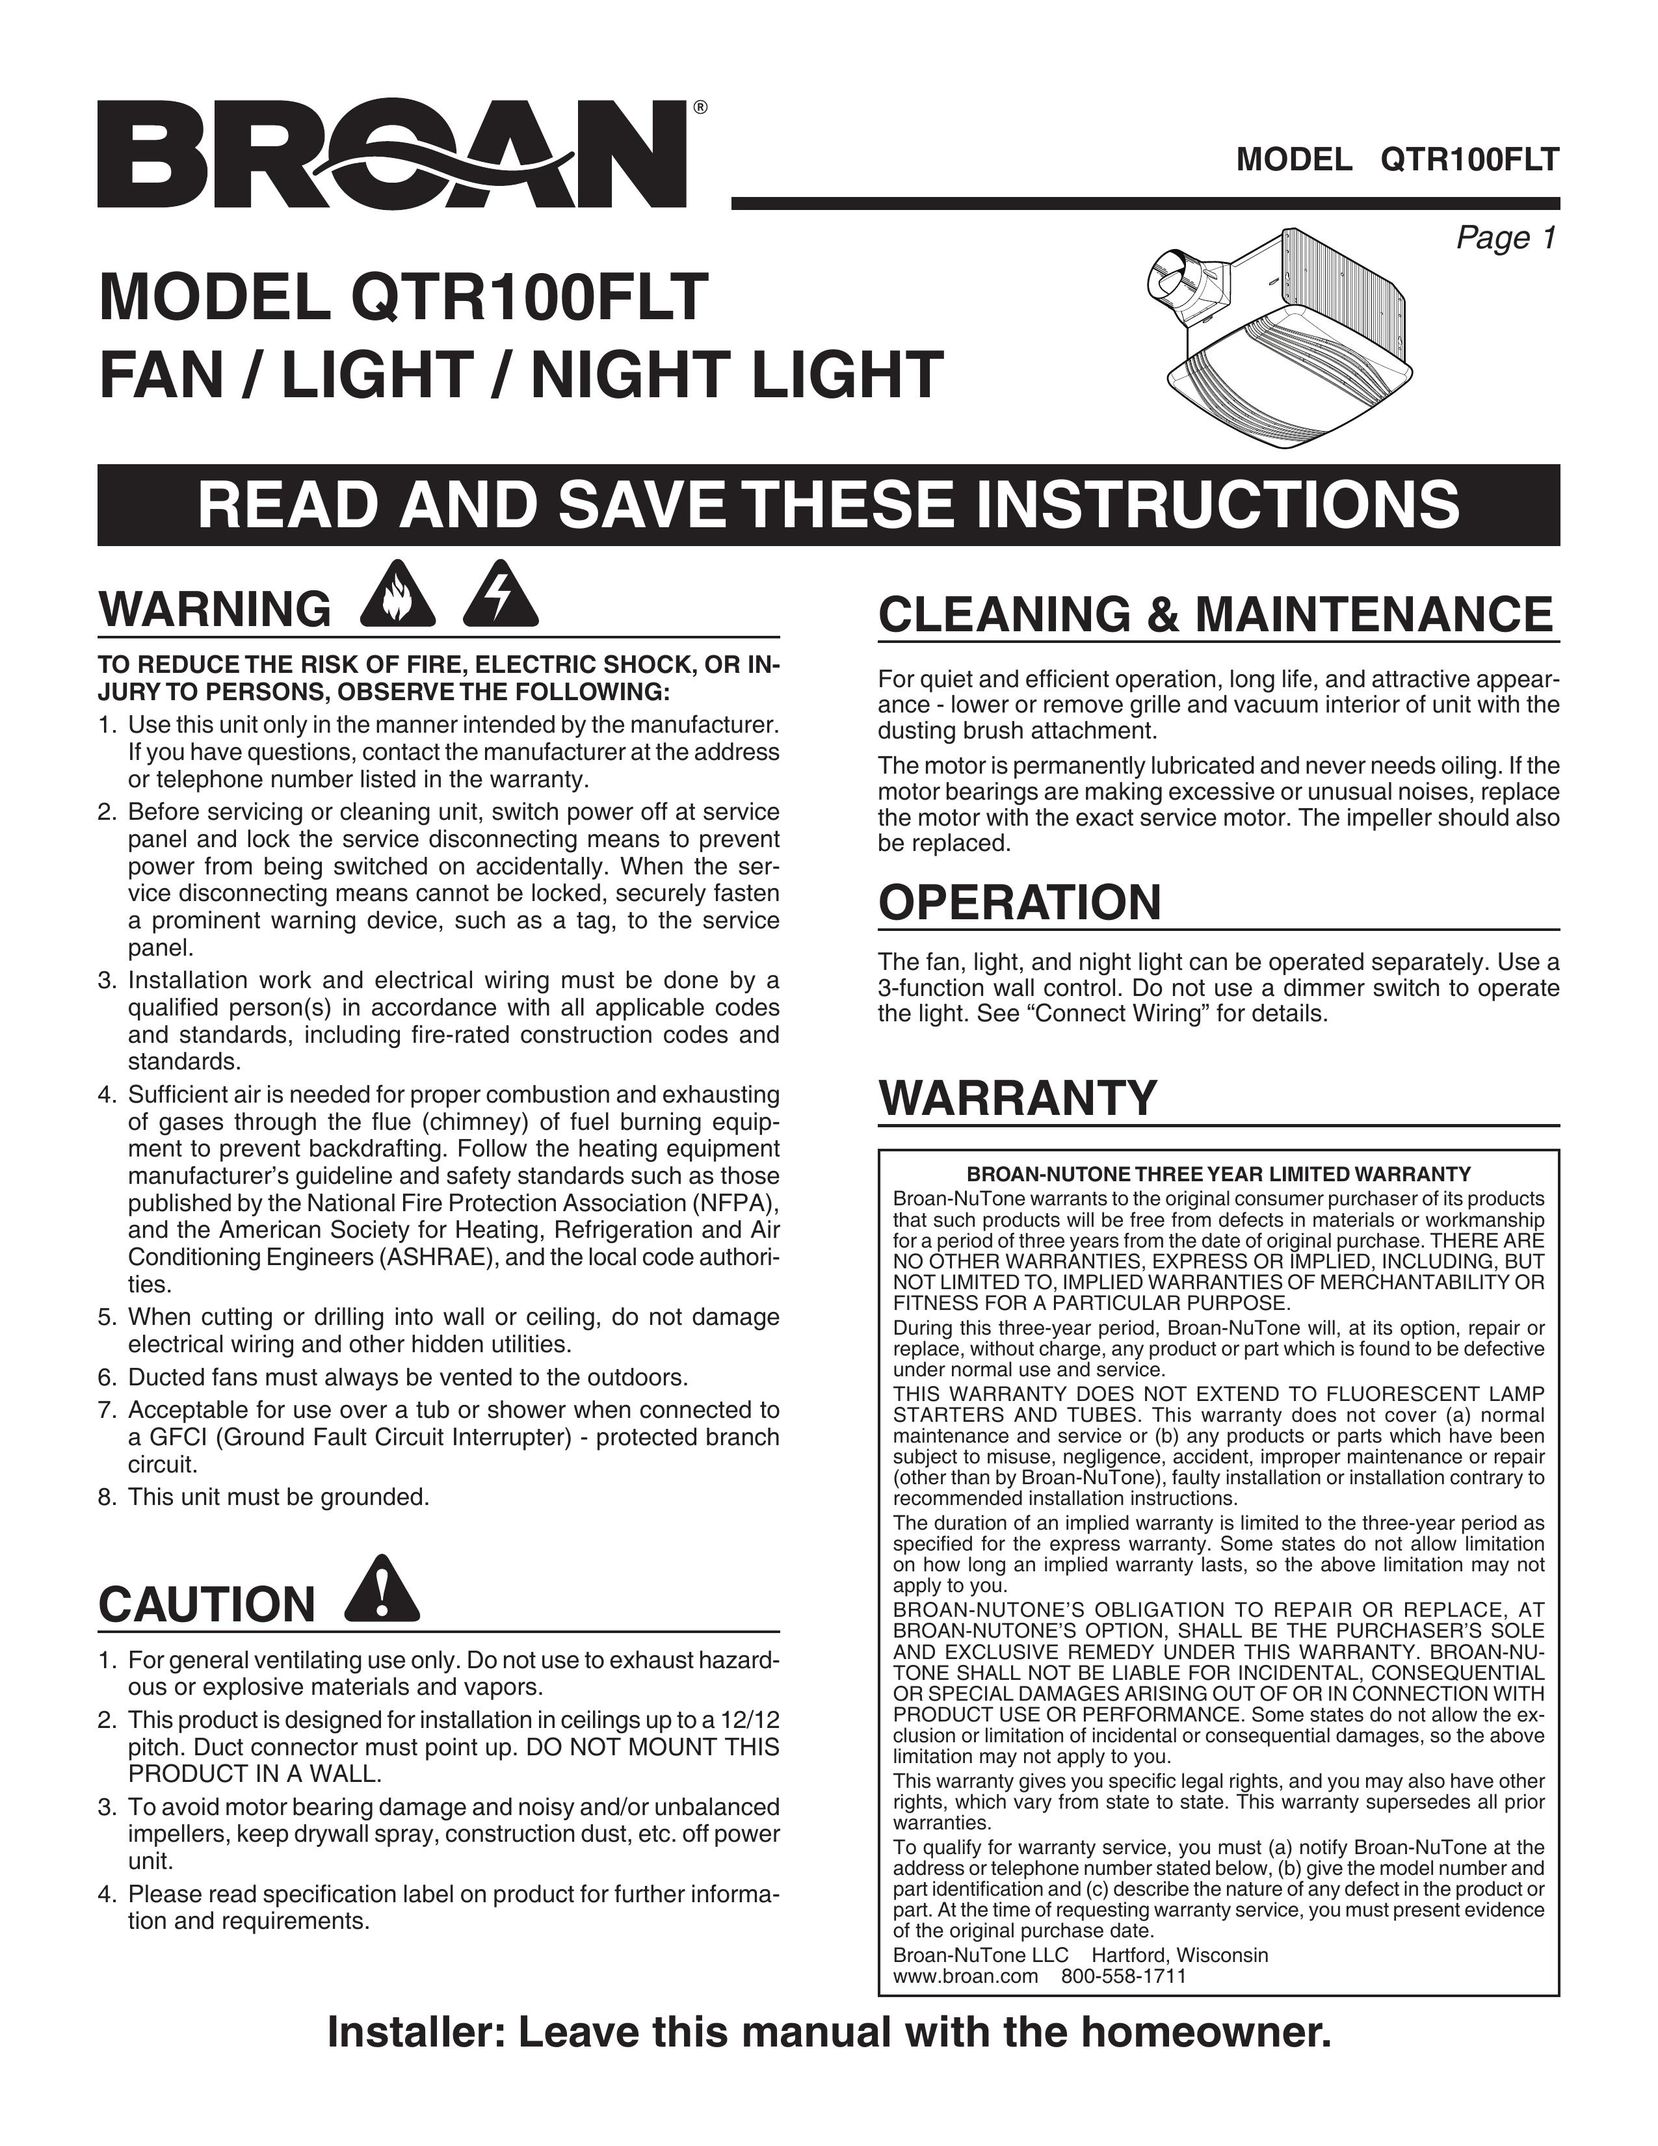 Broan QTR100FLT Indoor Furnishings User Manual (Page 1)